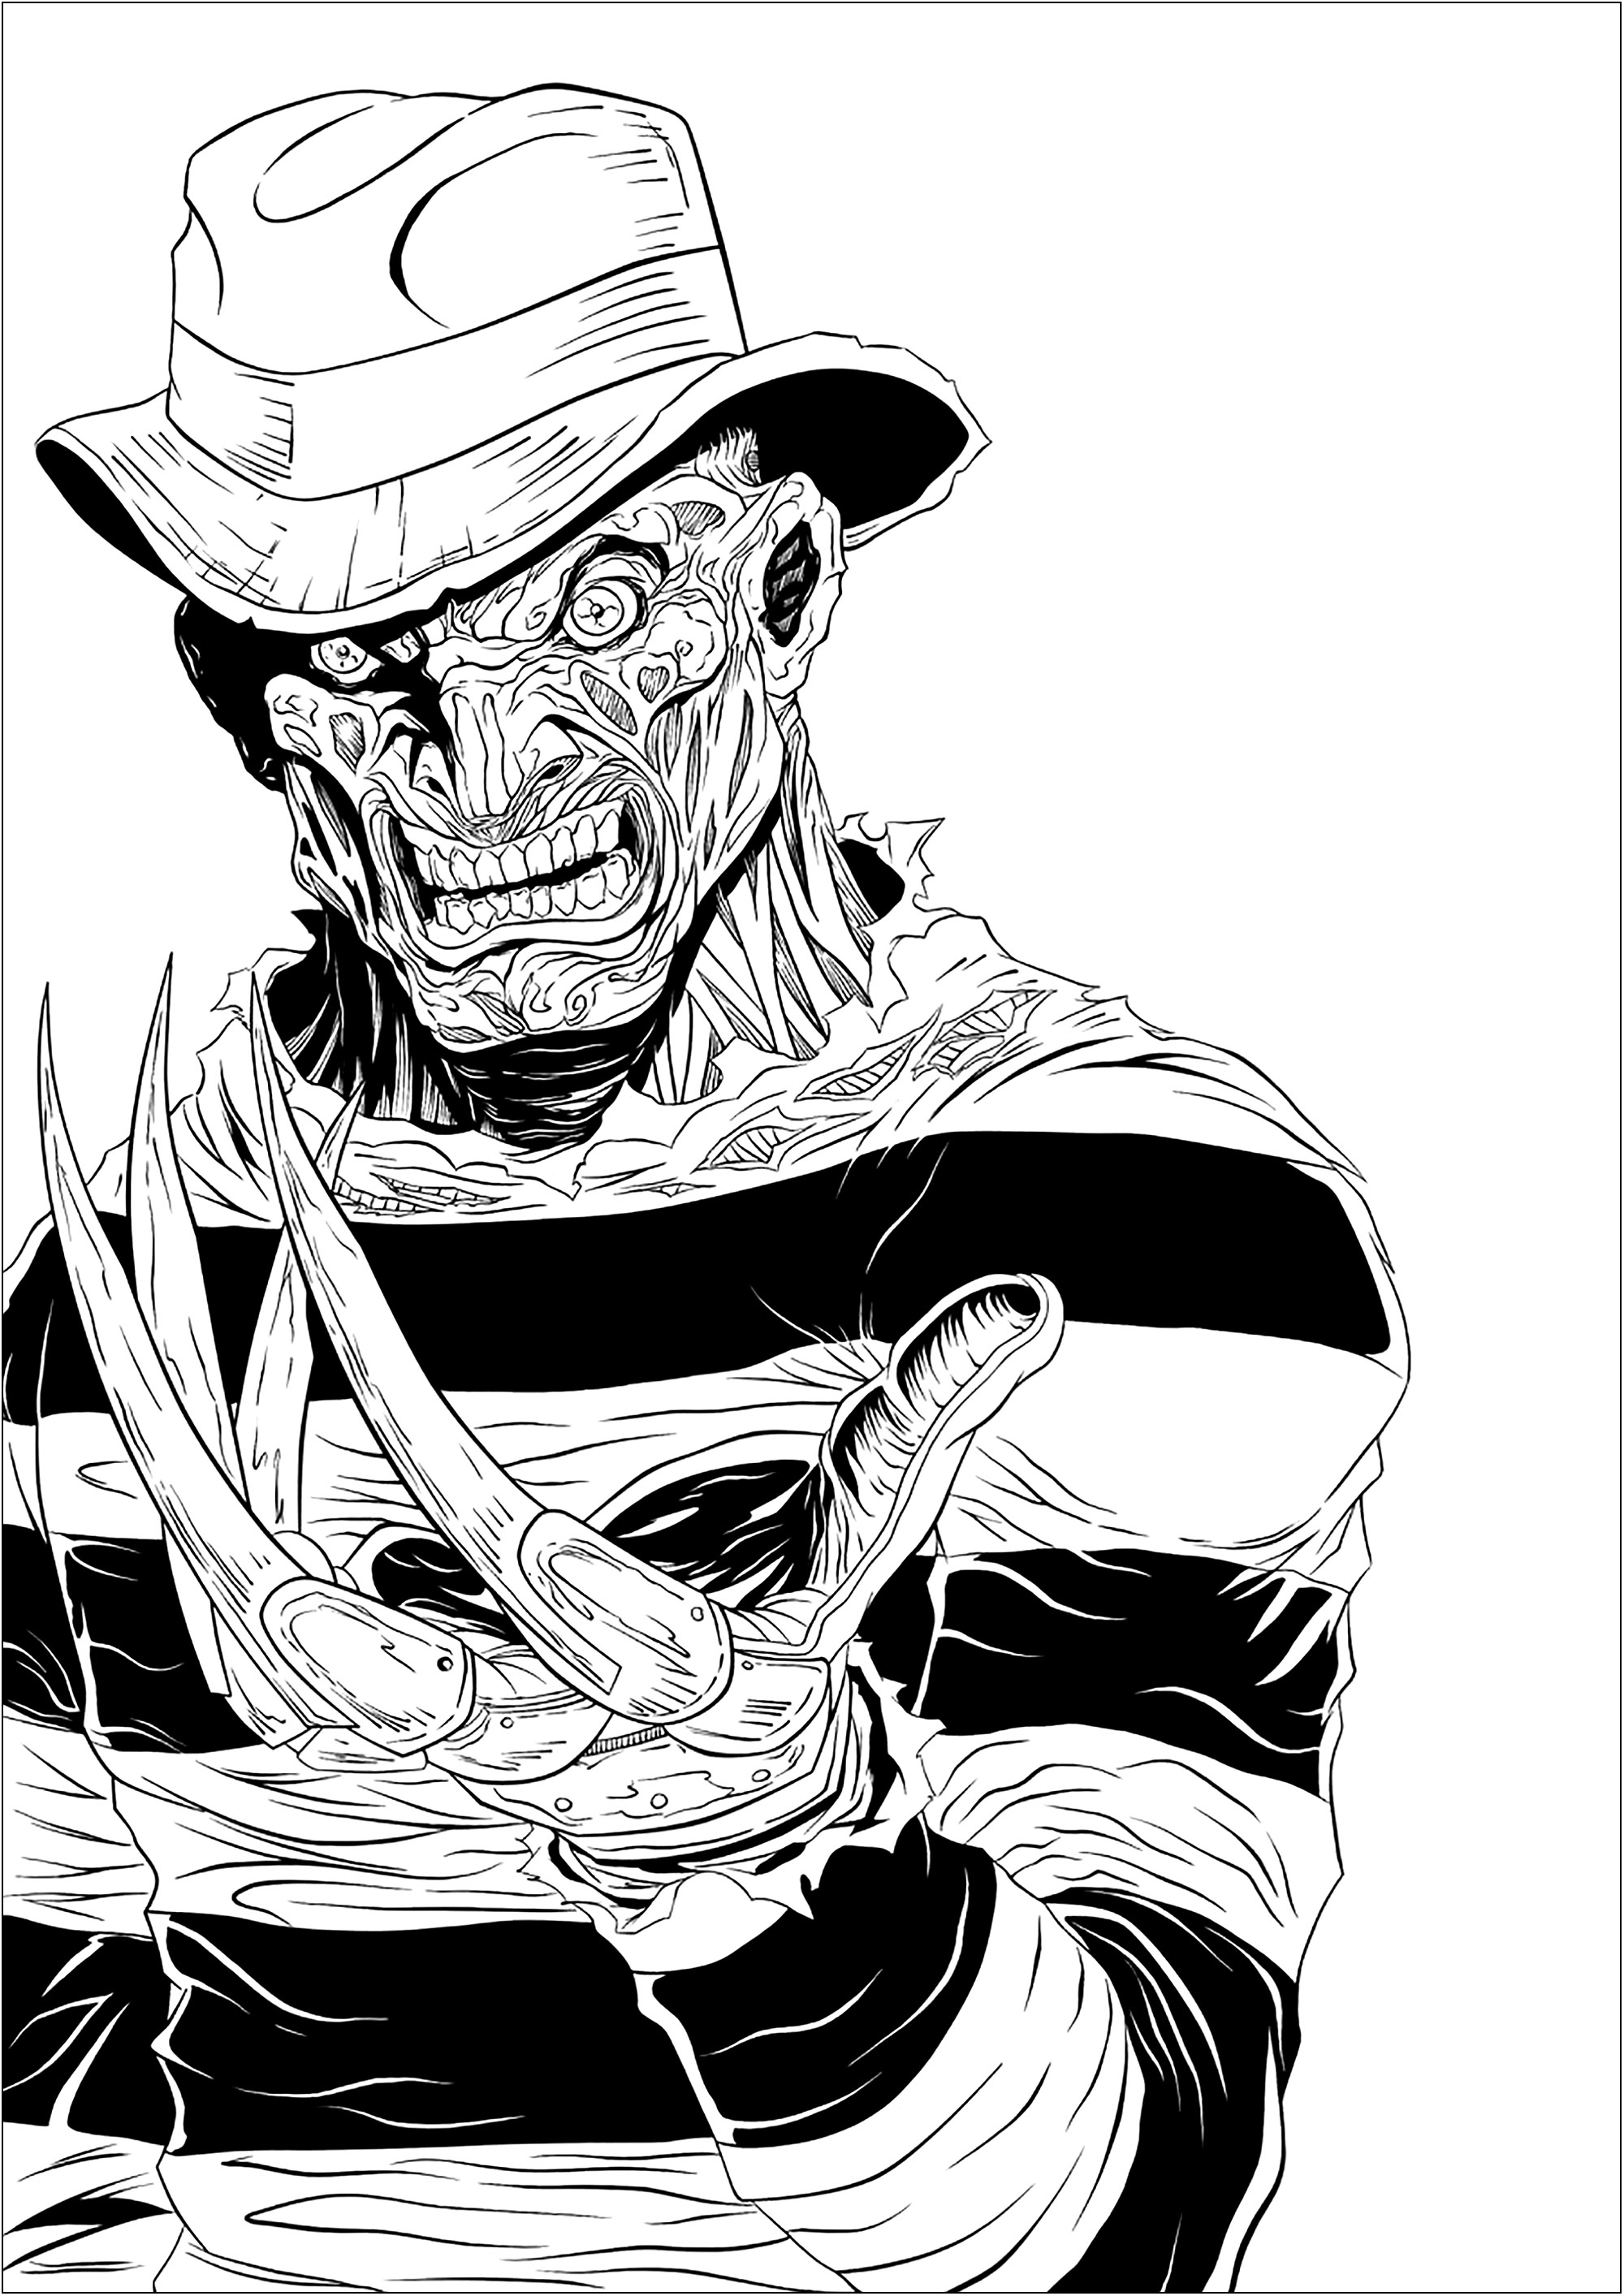 Lo spaventoso Freddy Krueger e i suoi artigli affilati, Artista : Digital Inkz